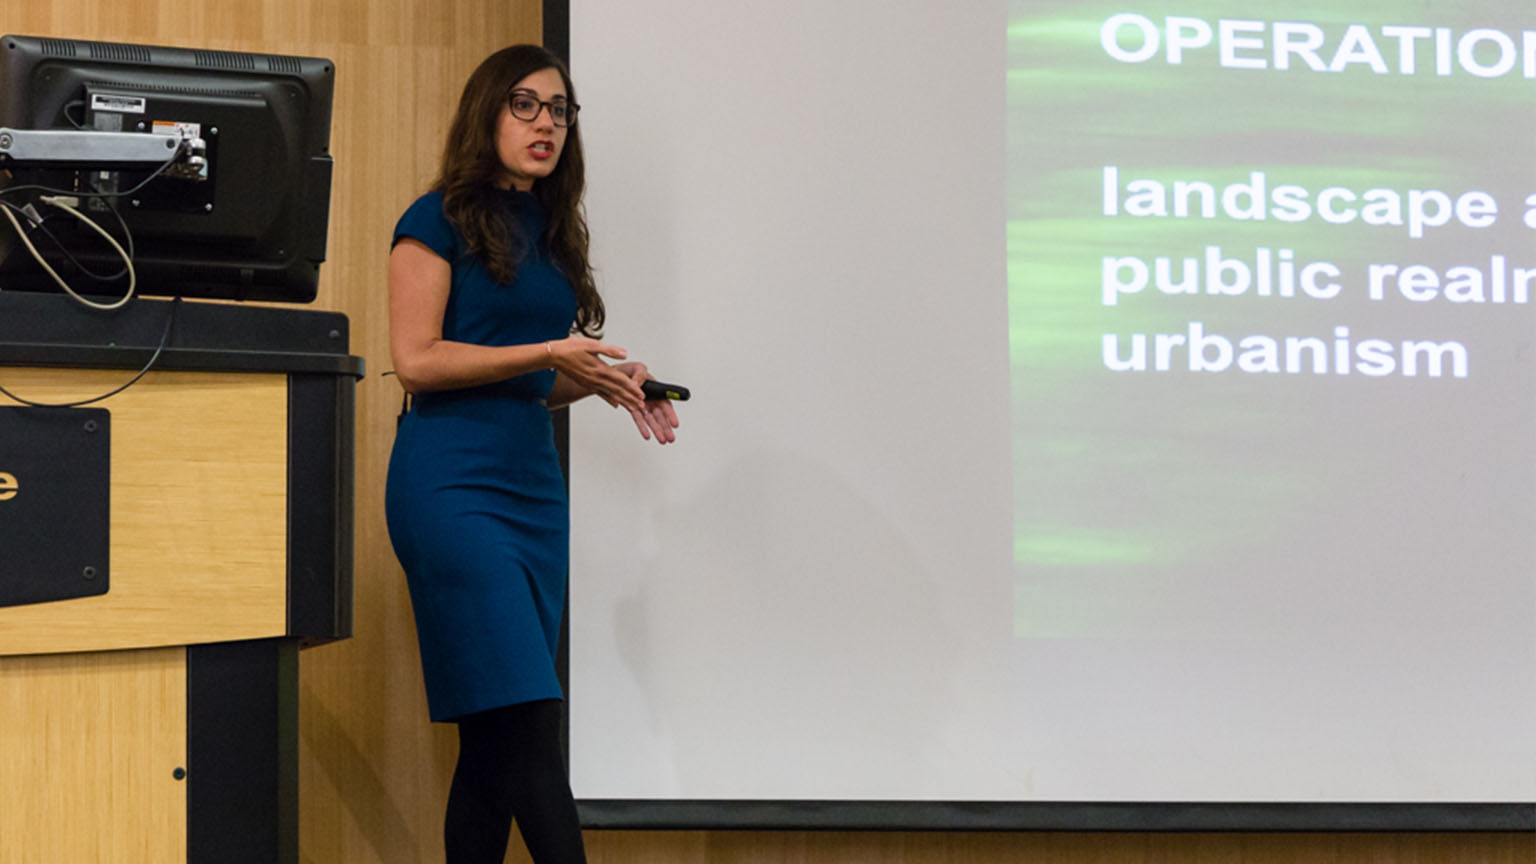 Isabel Castilla presenting her lecture in the Reinsch-Pierce Family Auditorium